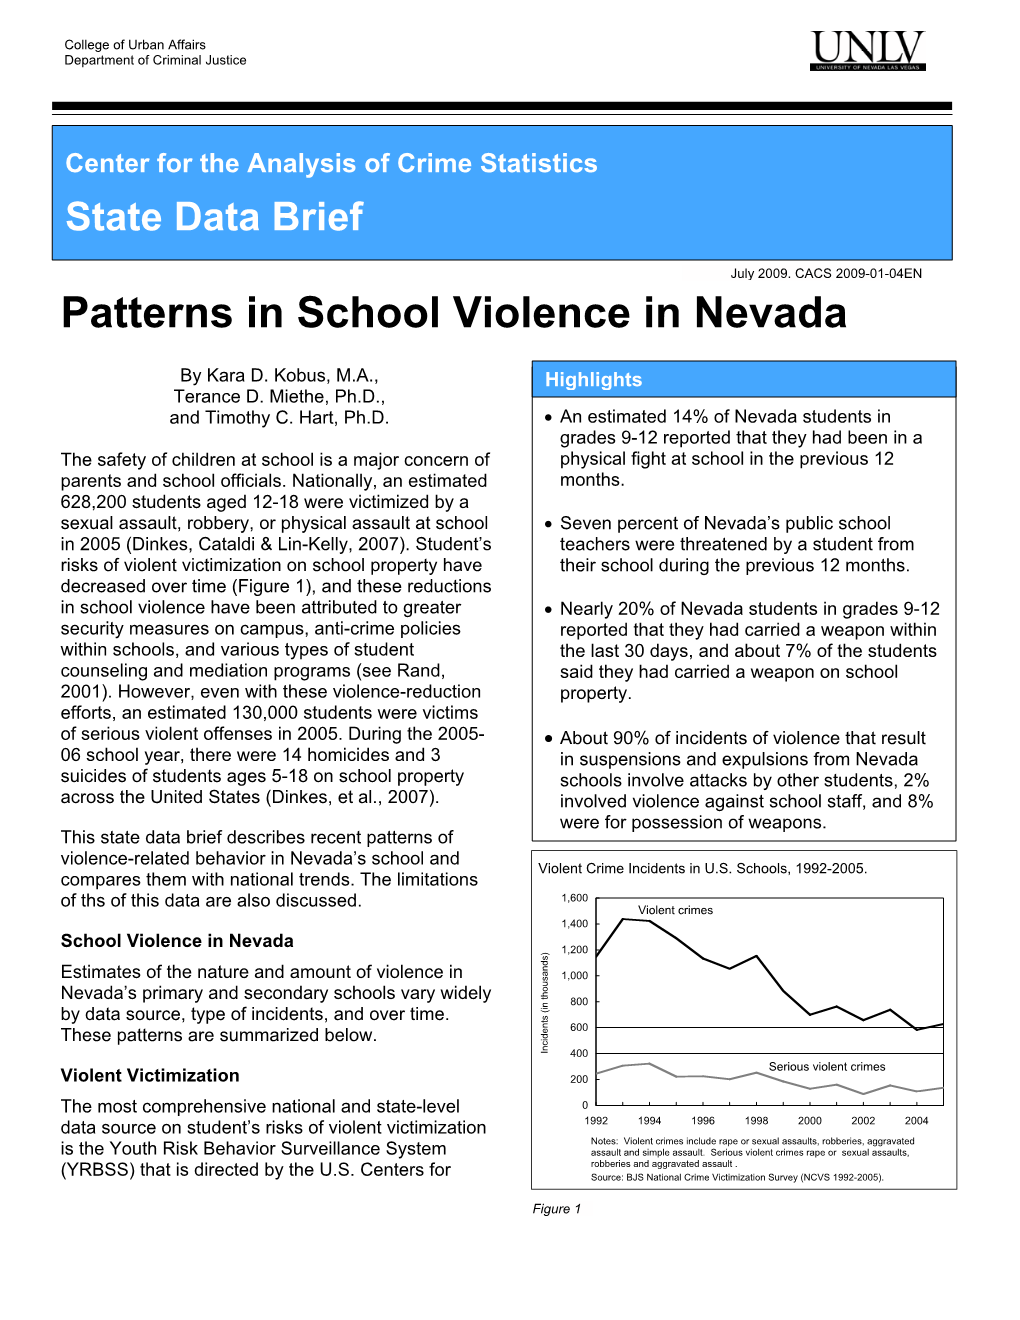 Patterns in School Violence in Nevada